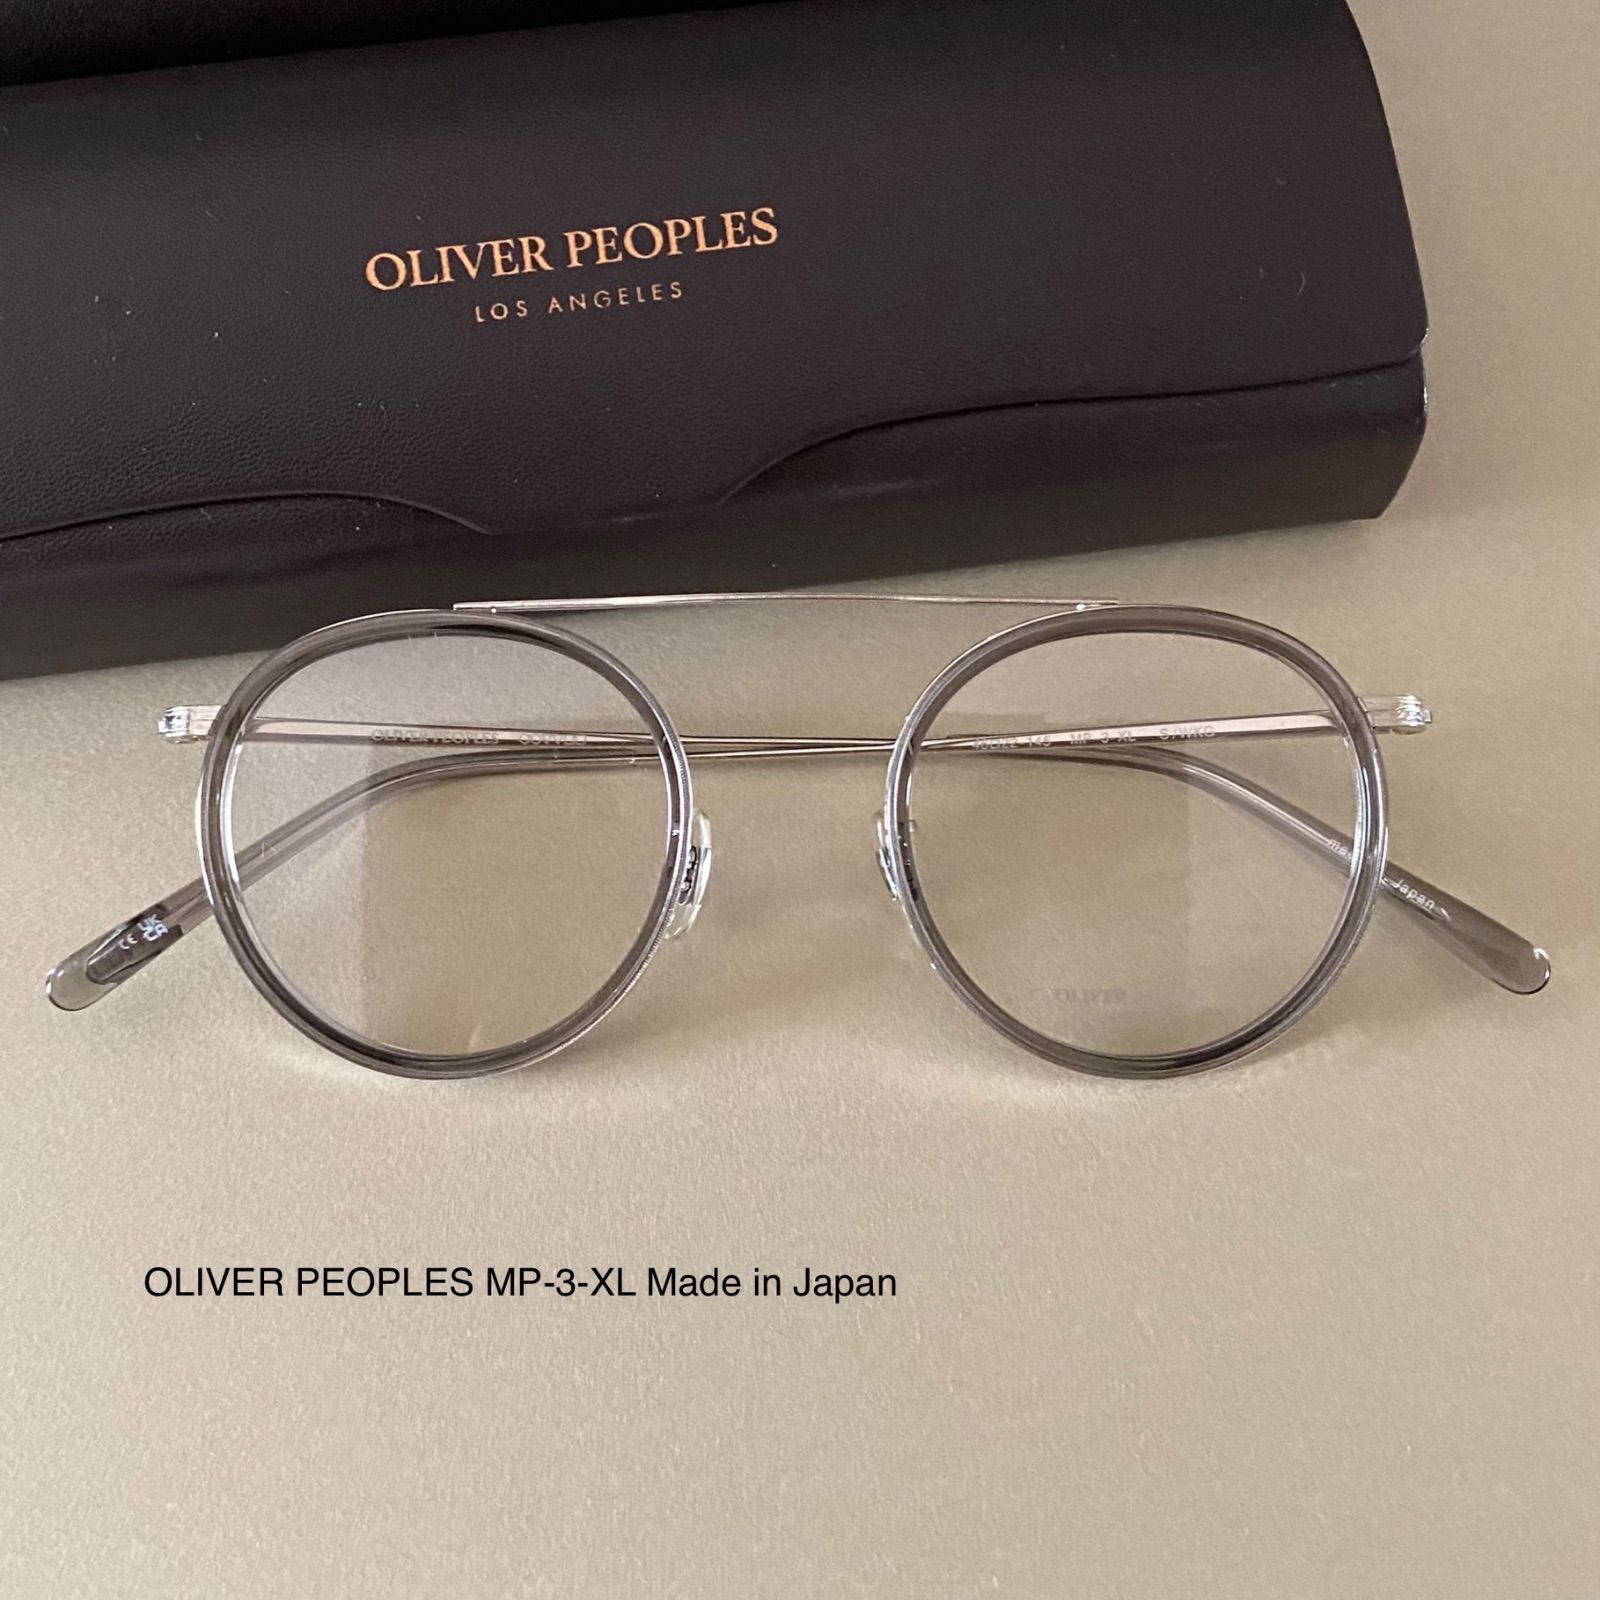 OV295 新品 OLIVER PEOPLES MP-3-XL メガネ オリバー